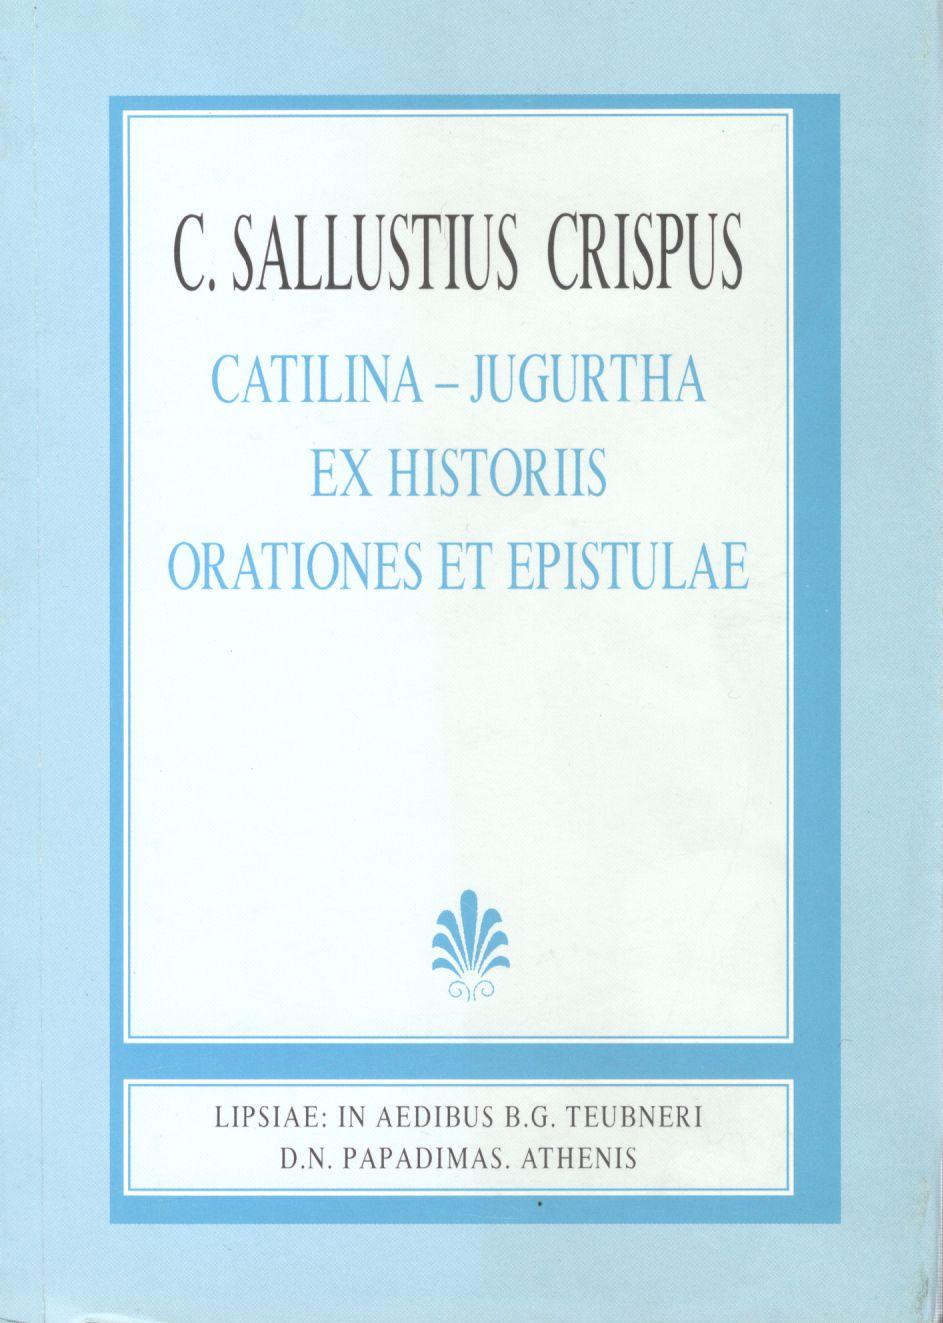 C. SALLUSTI CRISPI, CATILINA IUGURTHA EX HISTORIIS ORATIONES ET EPISTULAE (EXCERPTAE DE HISTORIIS), (ΓΑΙΟΥ ΣΑΛΛΟΥΣΤΙΟΥ ΚΡΙΣΠΟΥ, Η ΣΥΝΩΜΟΣΙΑ ΤΟΥ ΚΑΤΙΛΙΝΑ, ΙΟΥΓΟΥΡΘΙΚΟΣ ΠΟΛΕΜΟΣ, ΕΚ ΤΩΝ ΙΣΤΟΡΙΩΝ/ΛΟΓΟΙ ΚΑΙ ΕΠΙΣΤΟΛΑΙ (ΕΚΛΟΓΗ ΕΚ ΤΩΝ ΙΣΤΟΡΙΩΝ)]